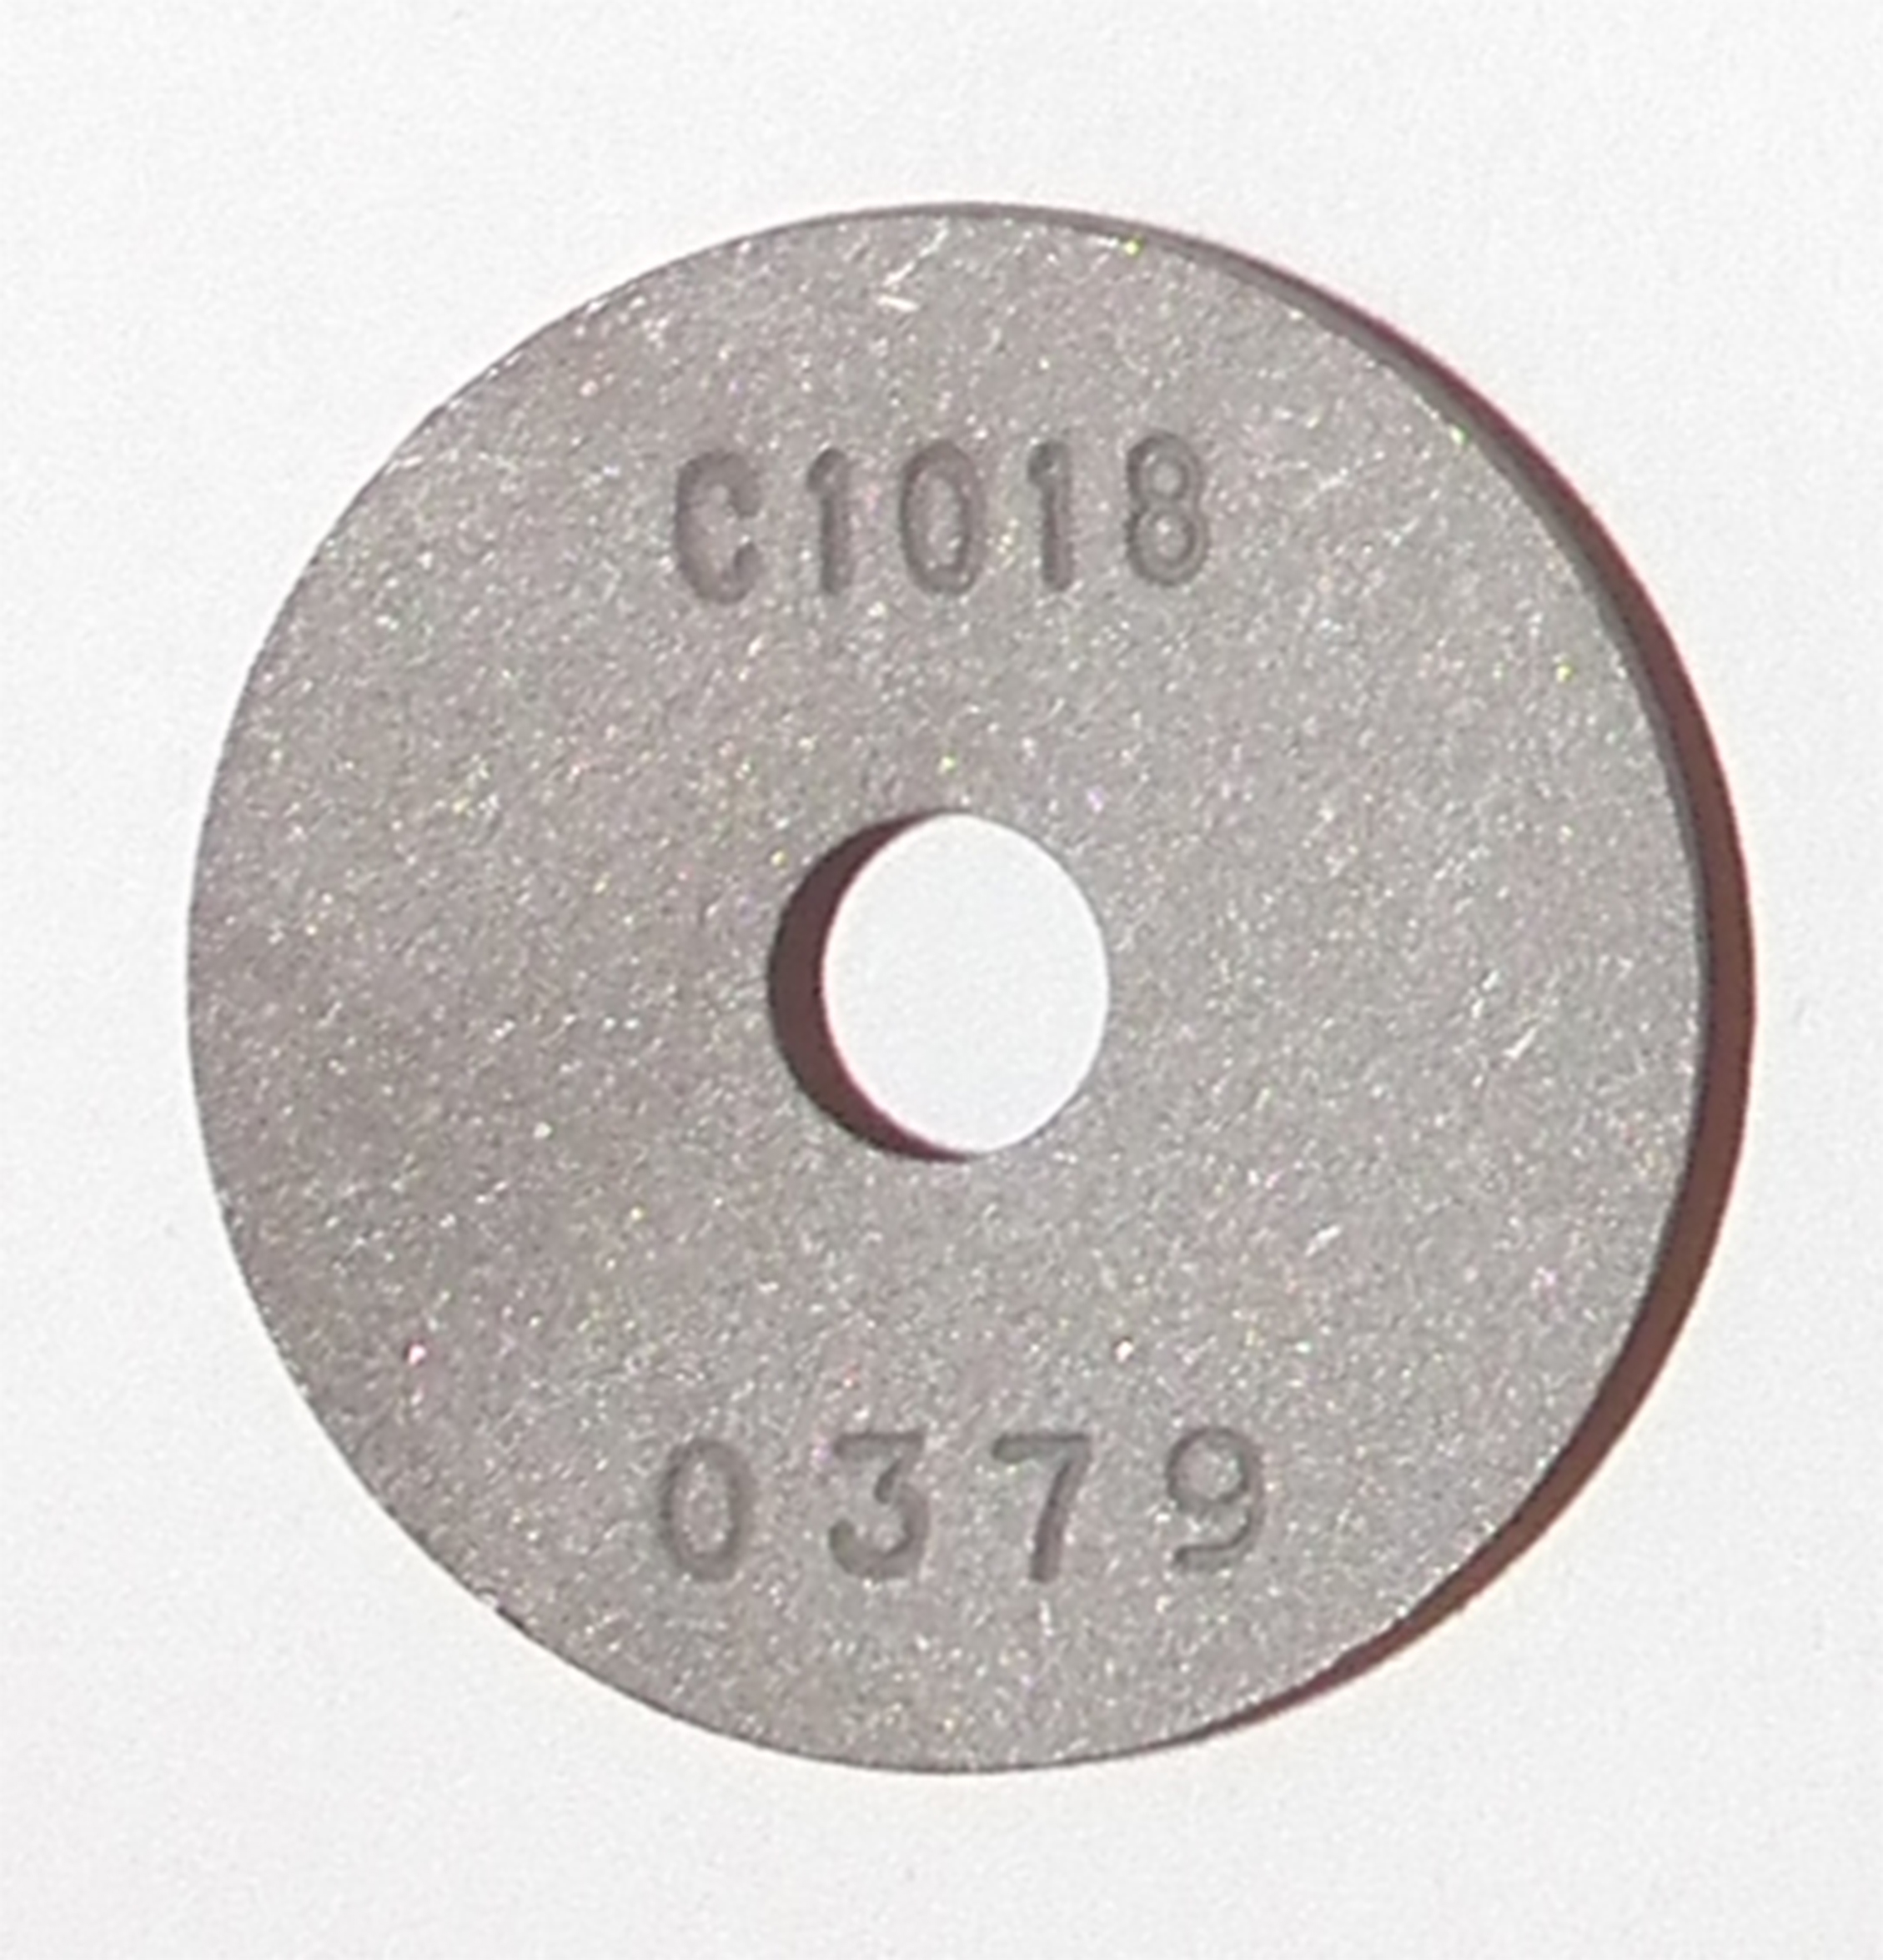 Flush disk corrosion coupon